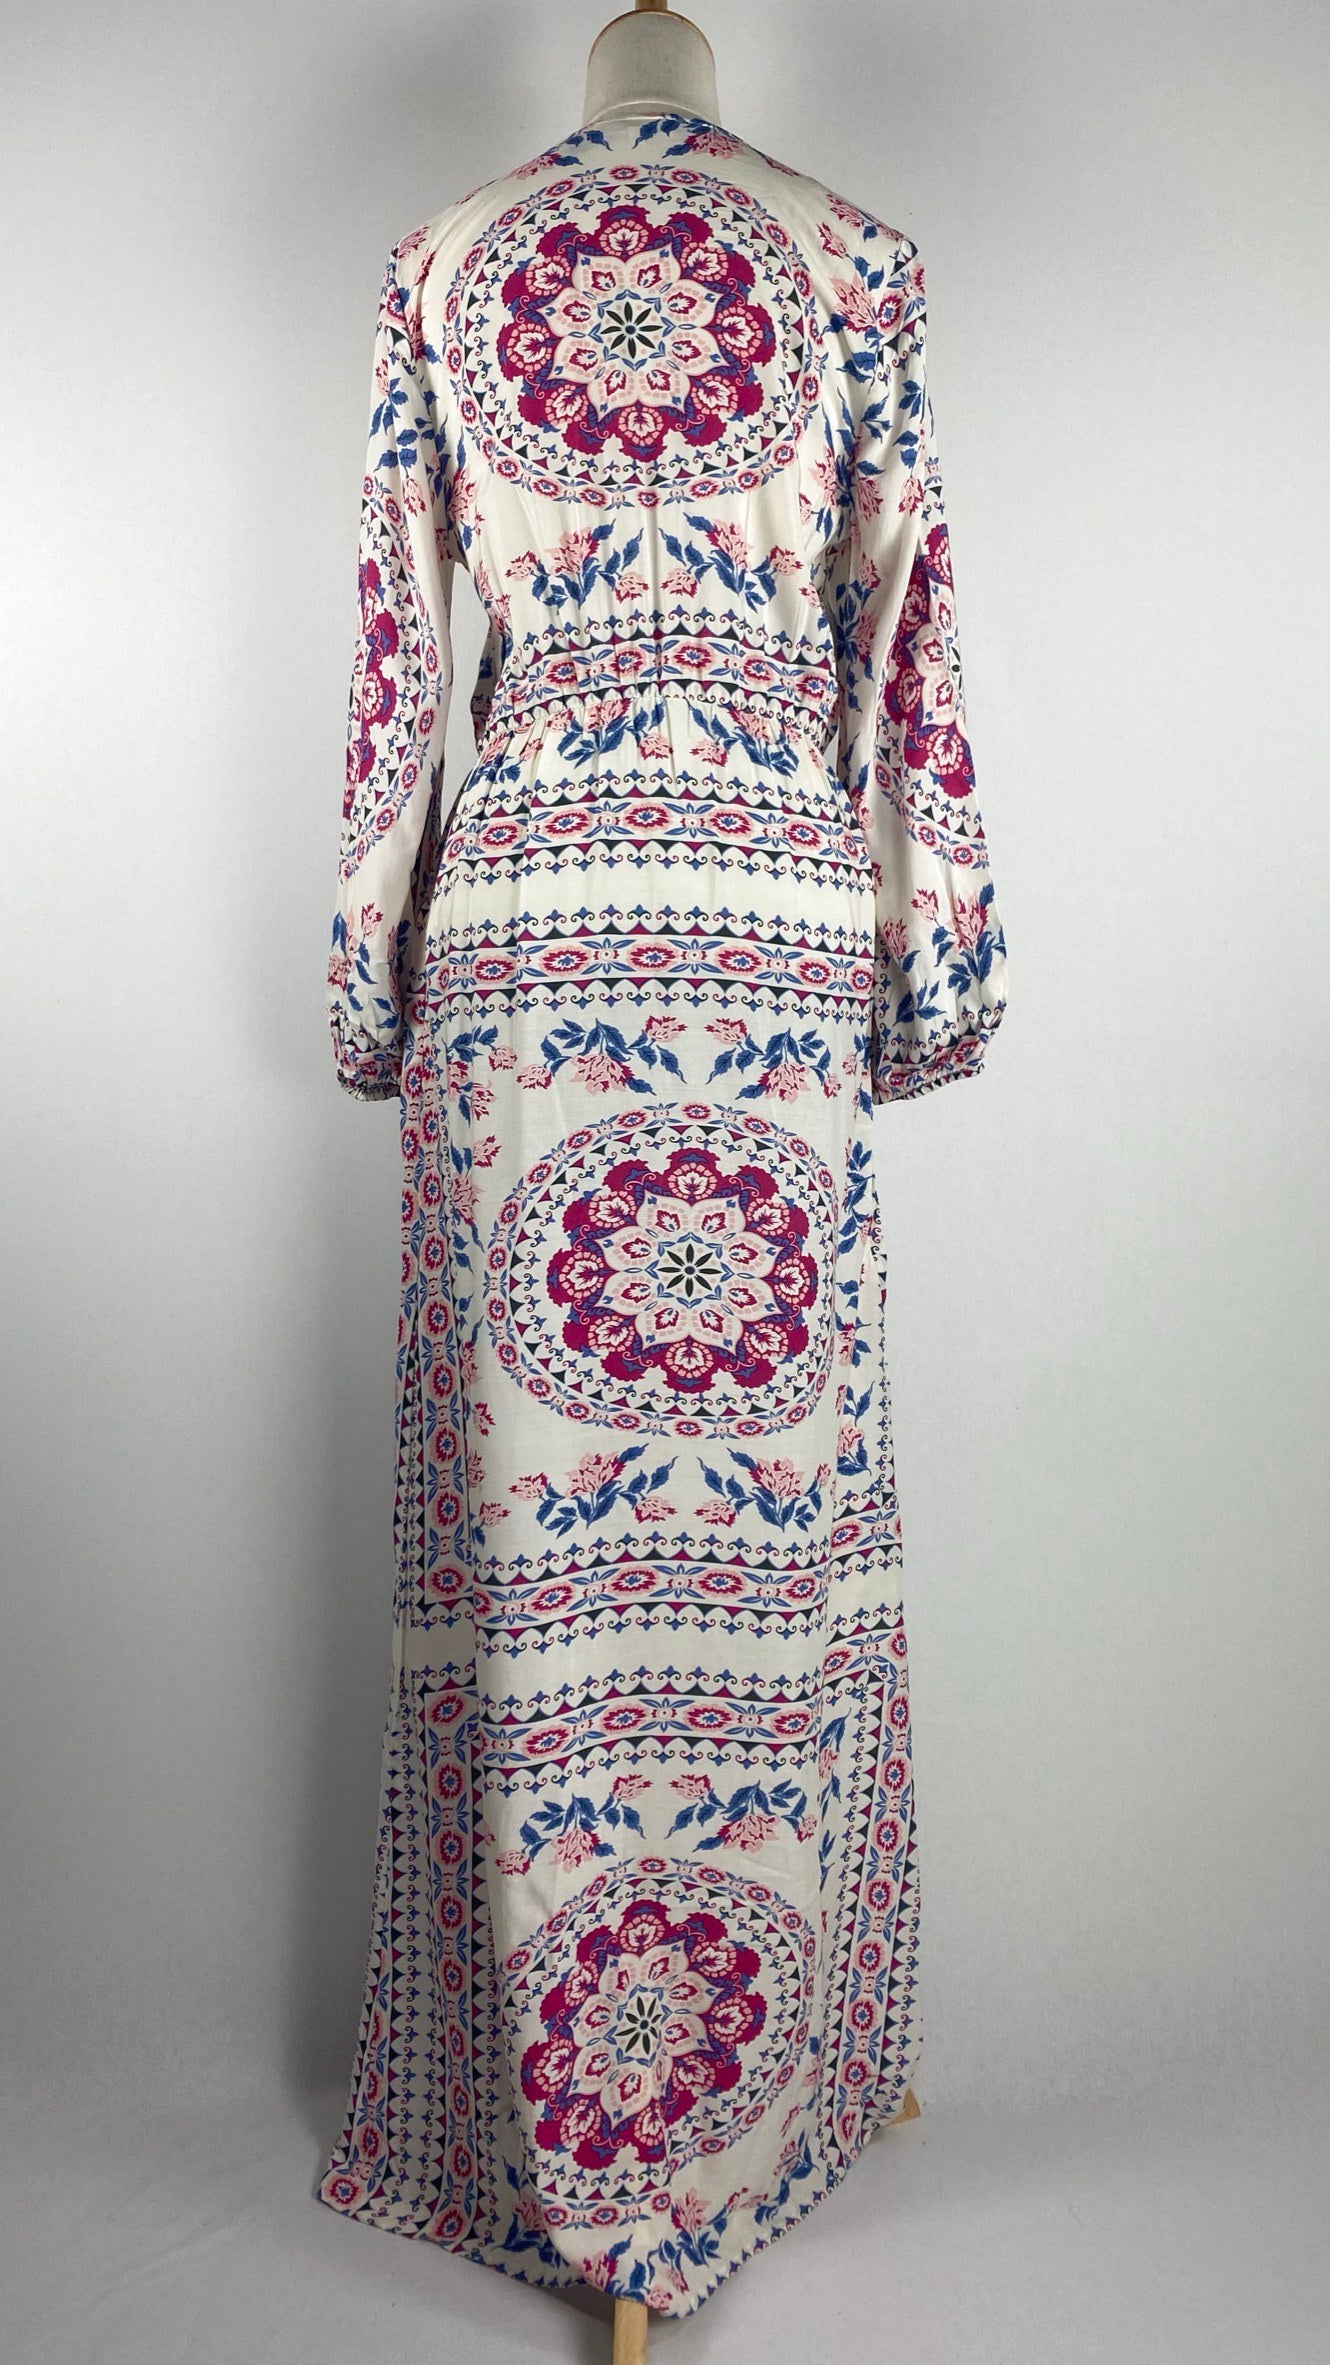 Long Sleeve Printed Maxi Dress, Beige